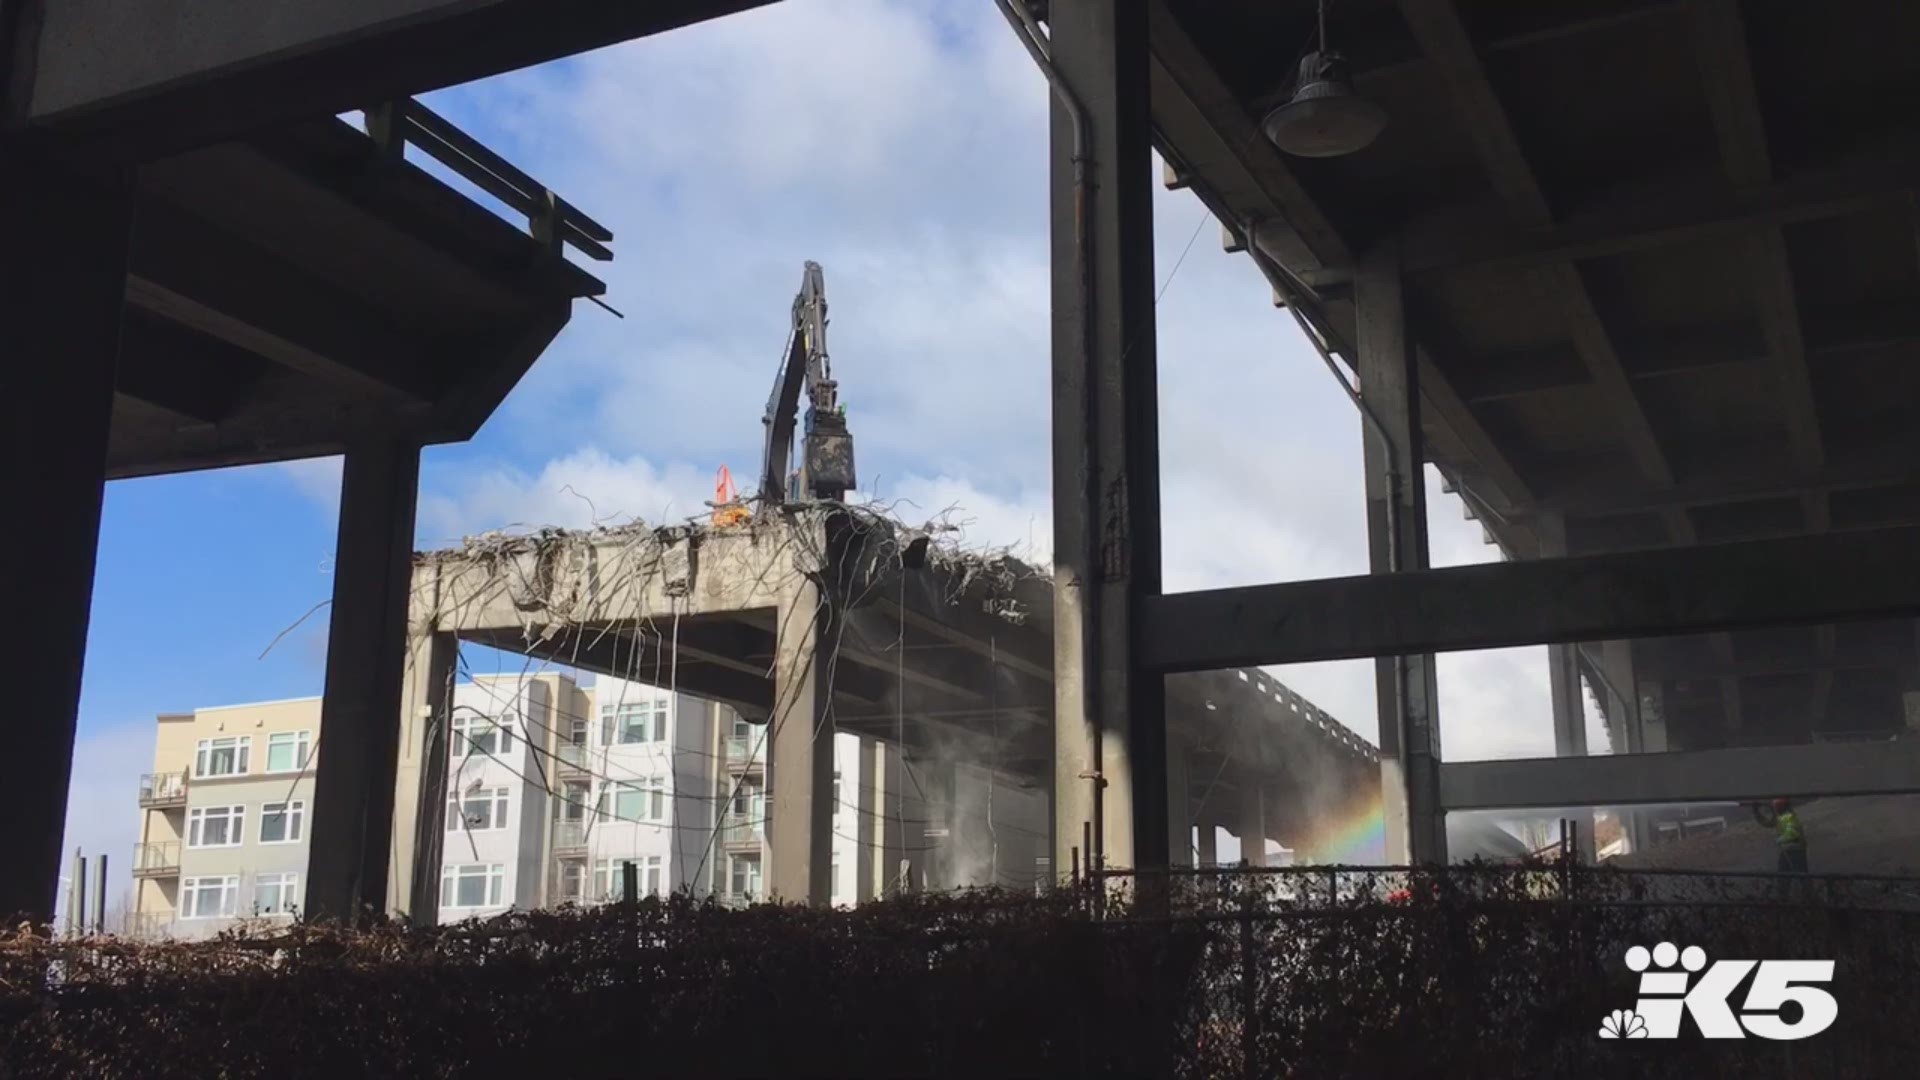 Crews tear down a portion of the Alaskan Way Viaduct on February 20, 2019.